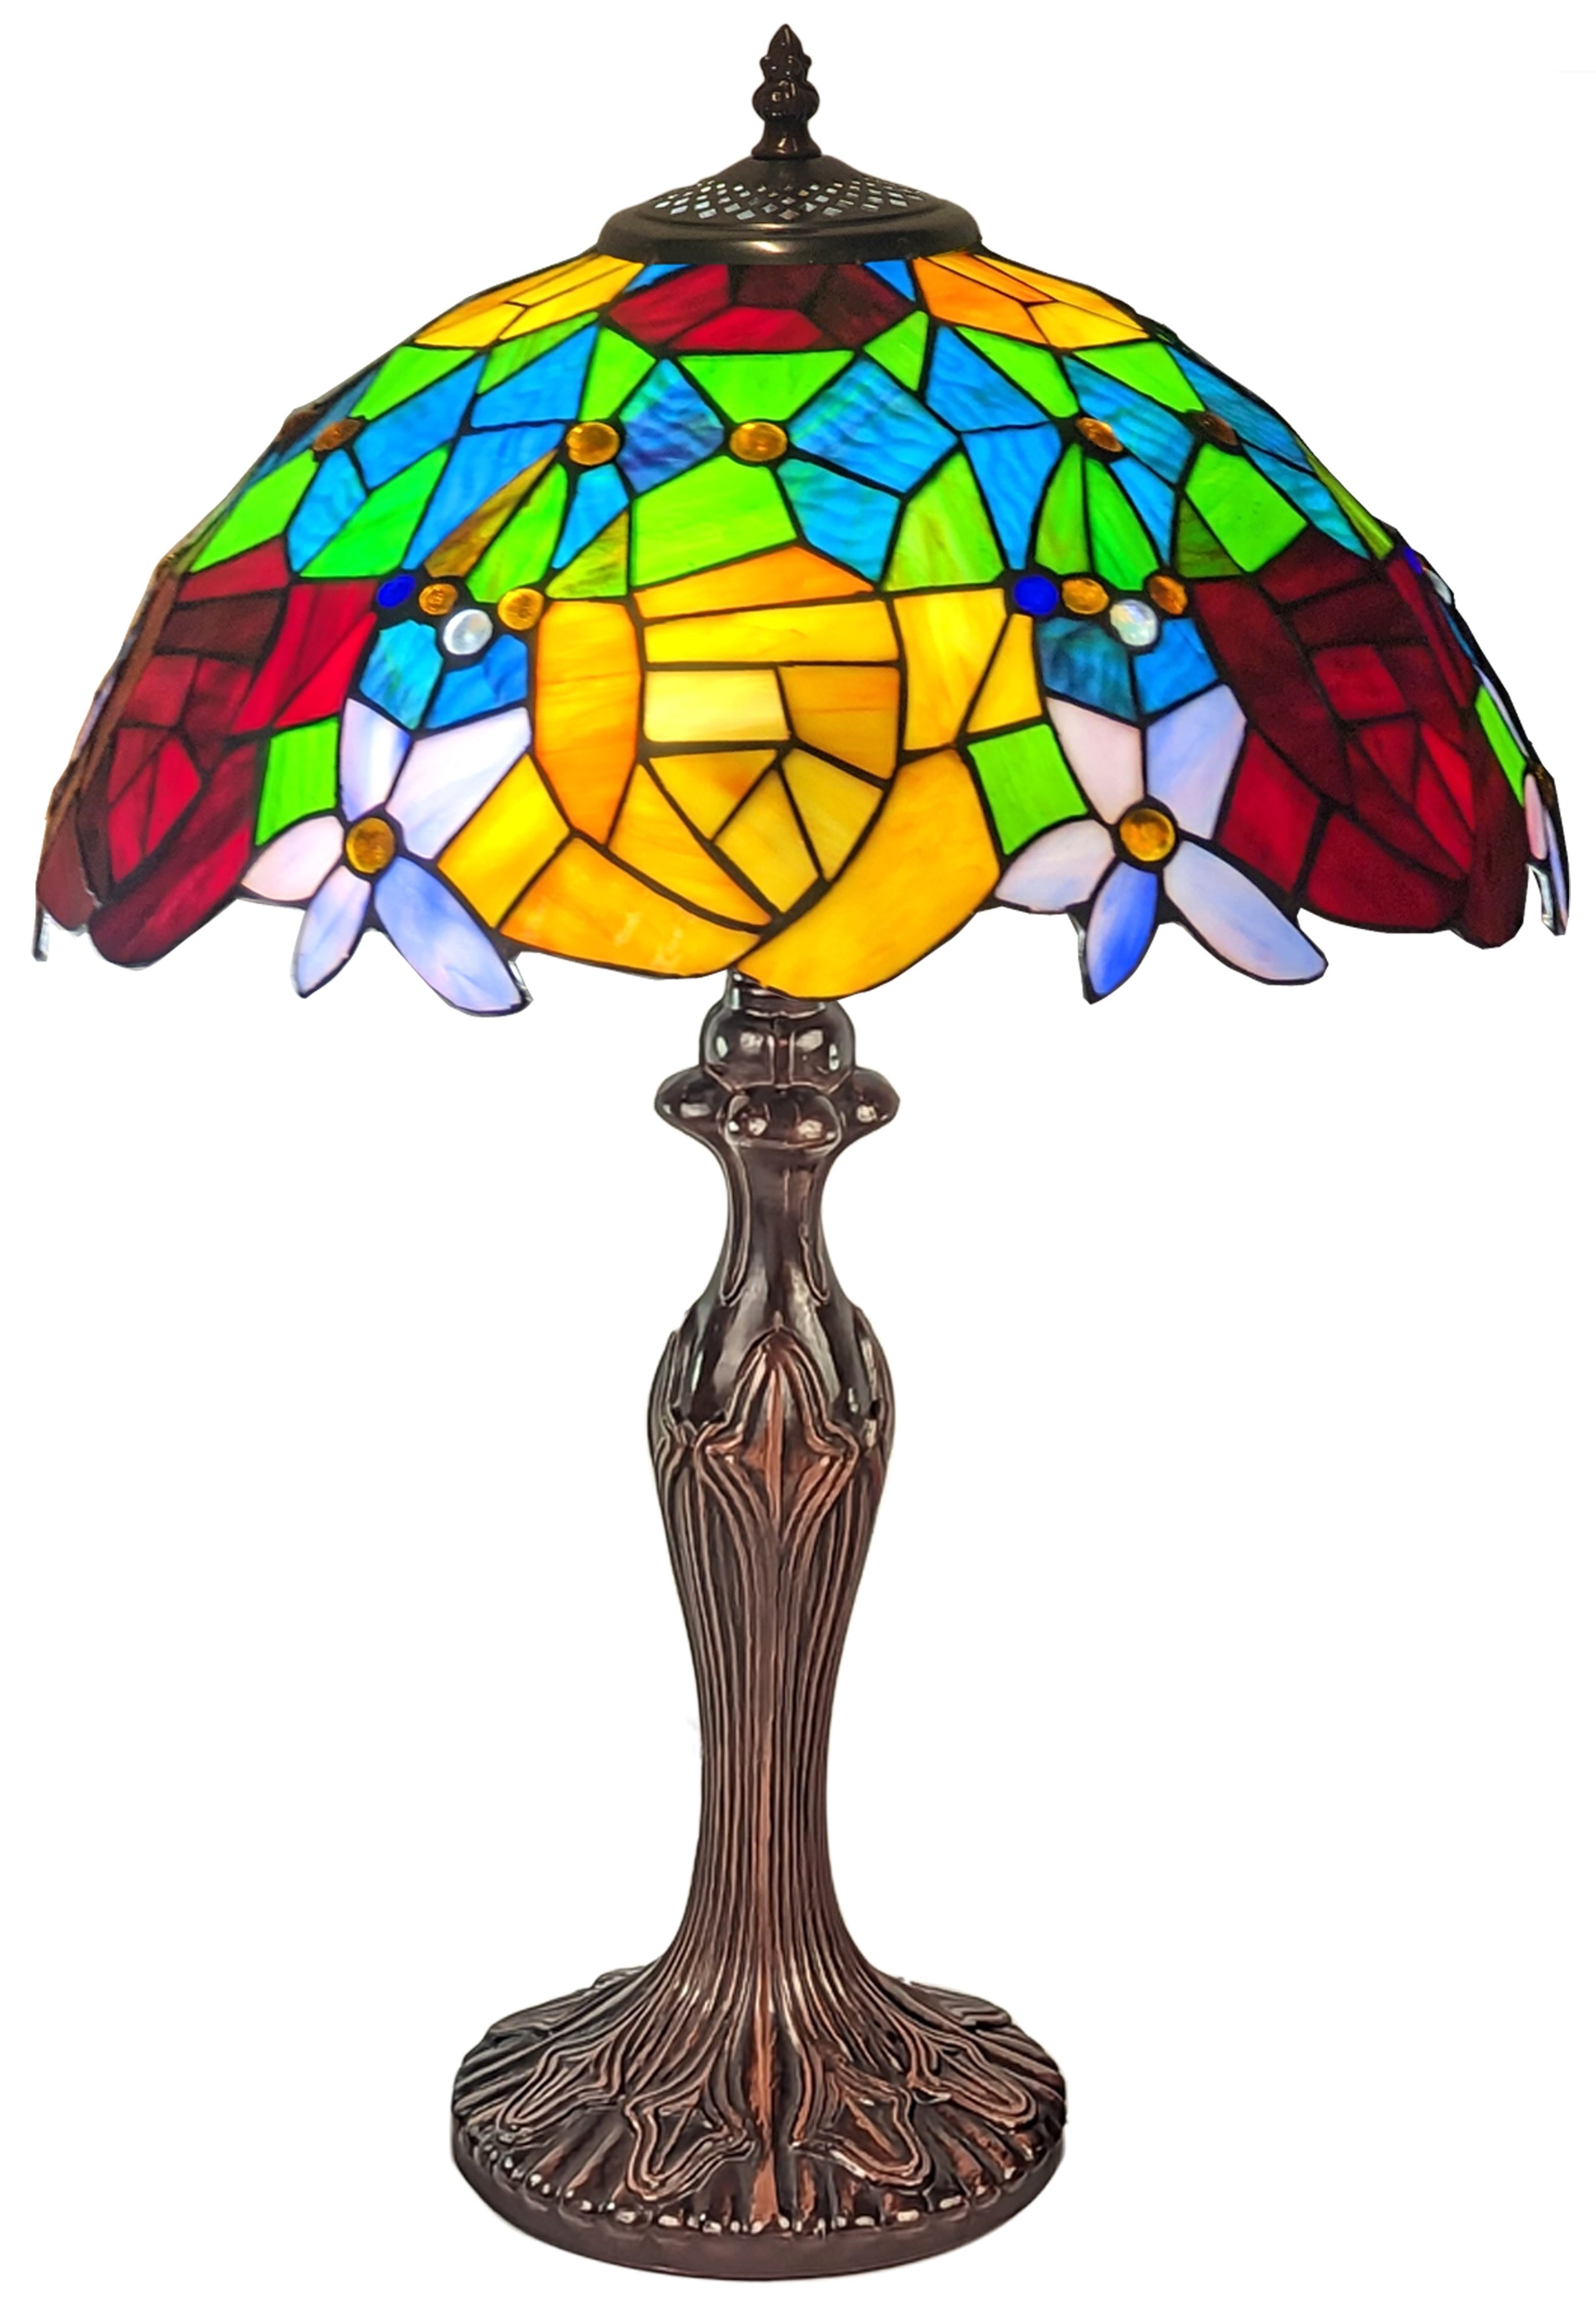 Rose Snowdrop Tiffany Lamp 59cm (Large) + Free Incandescent Bulb